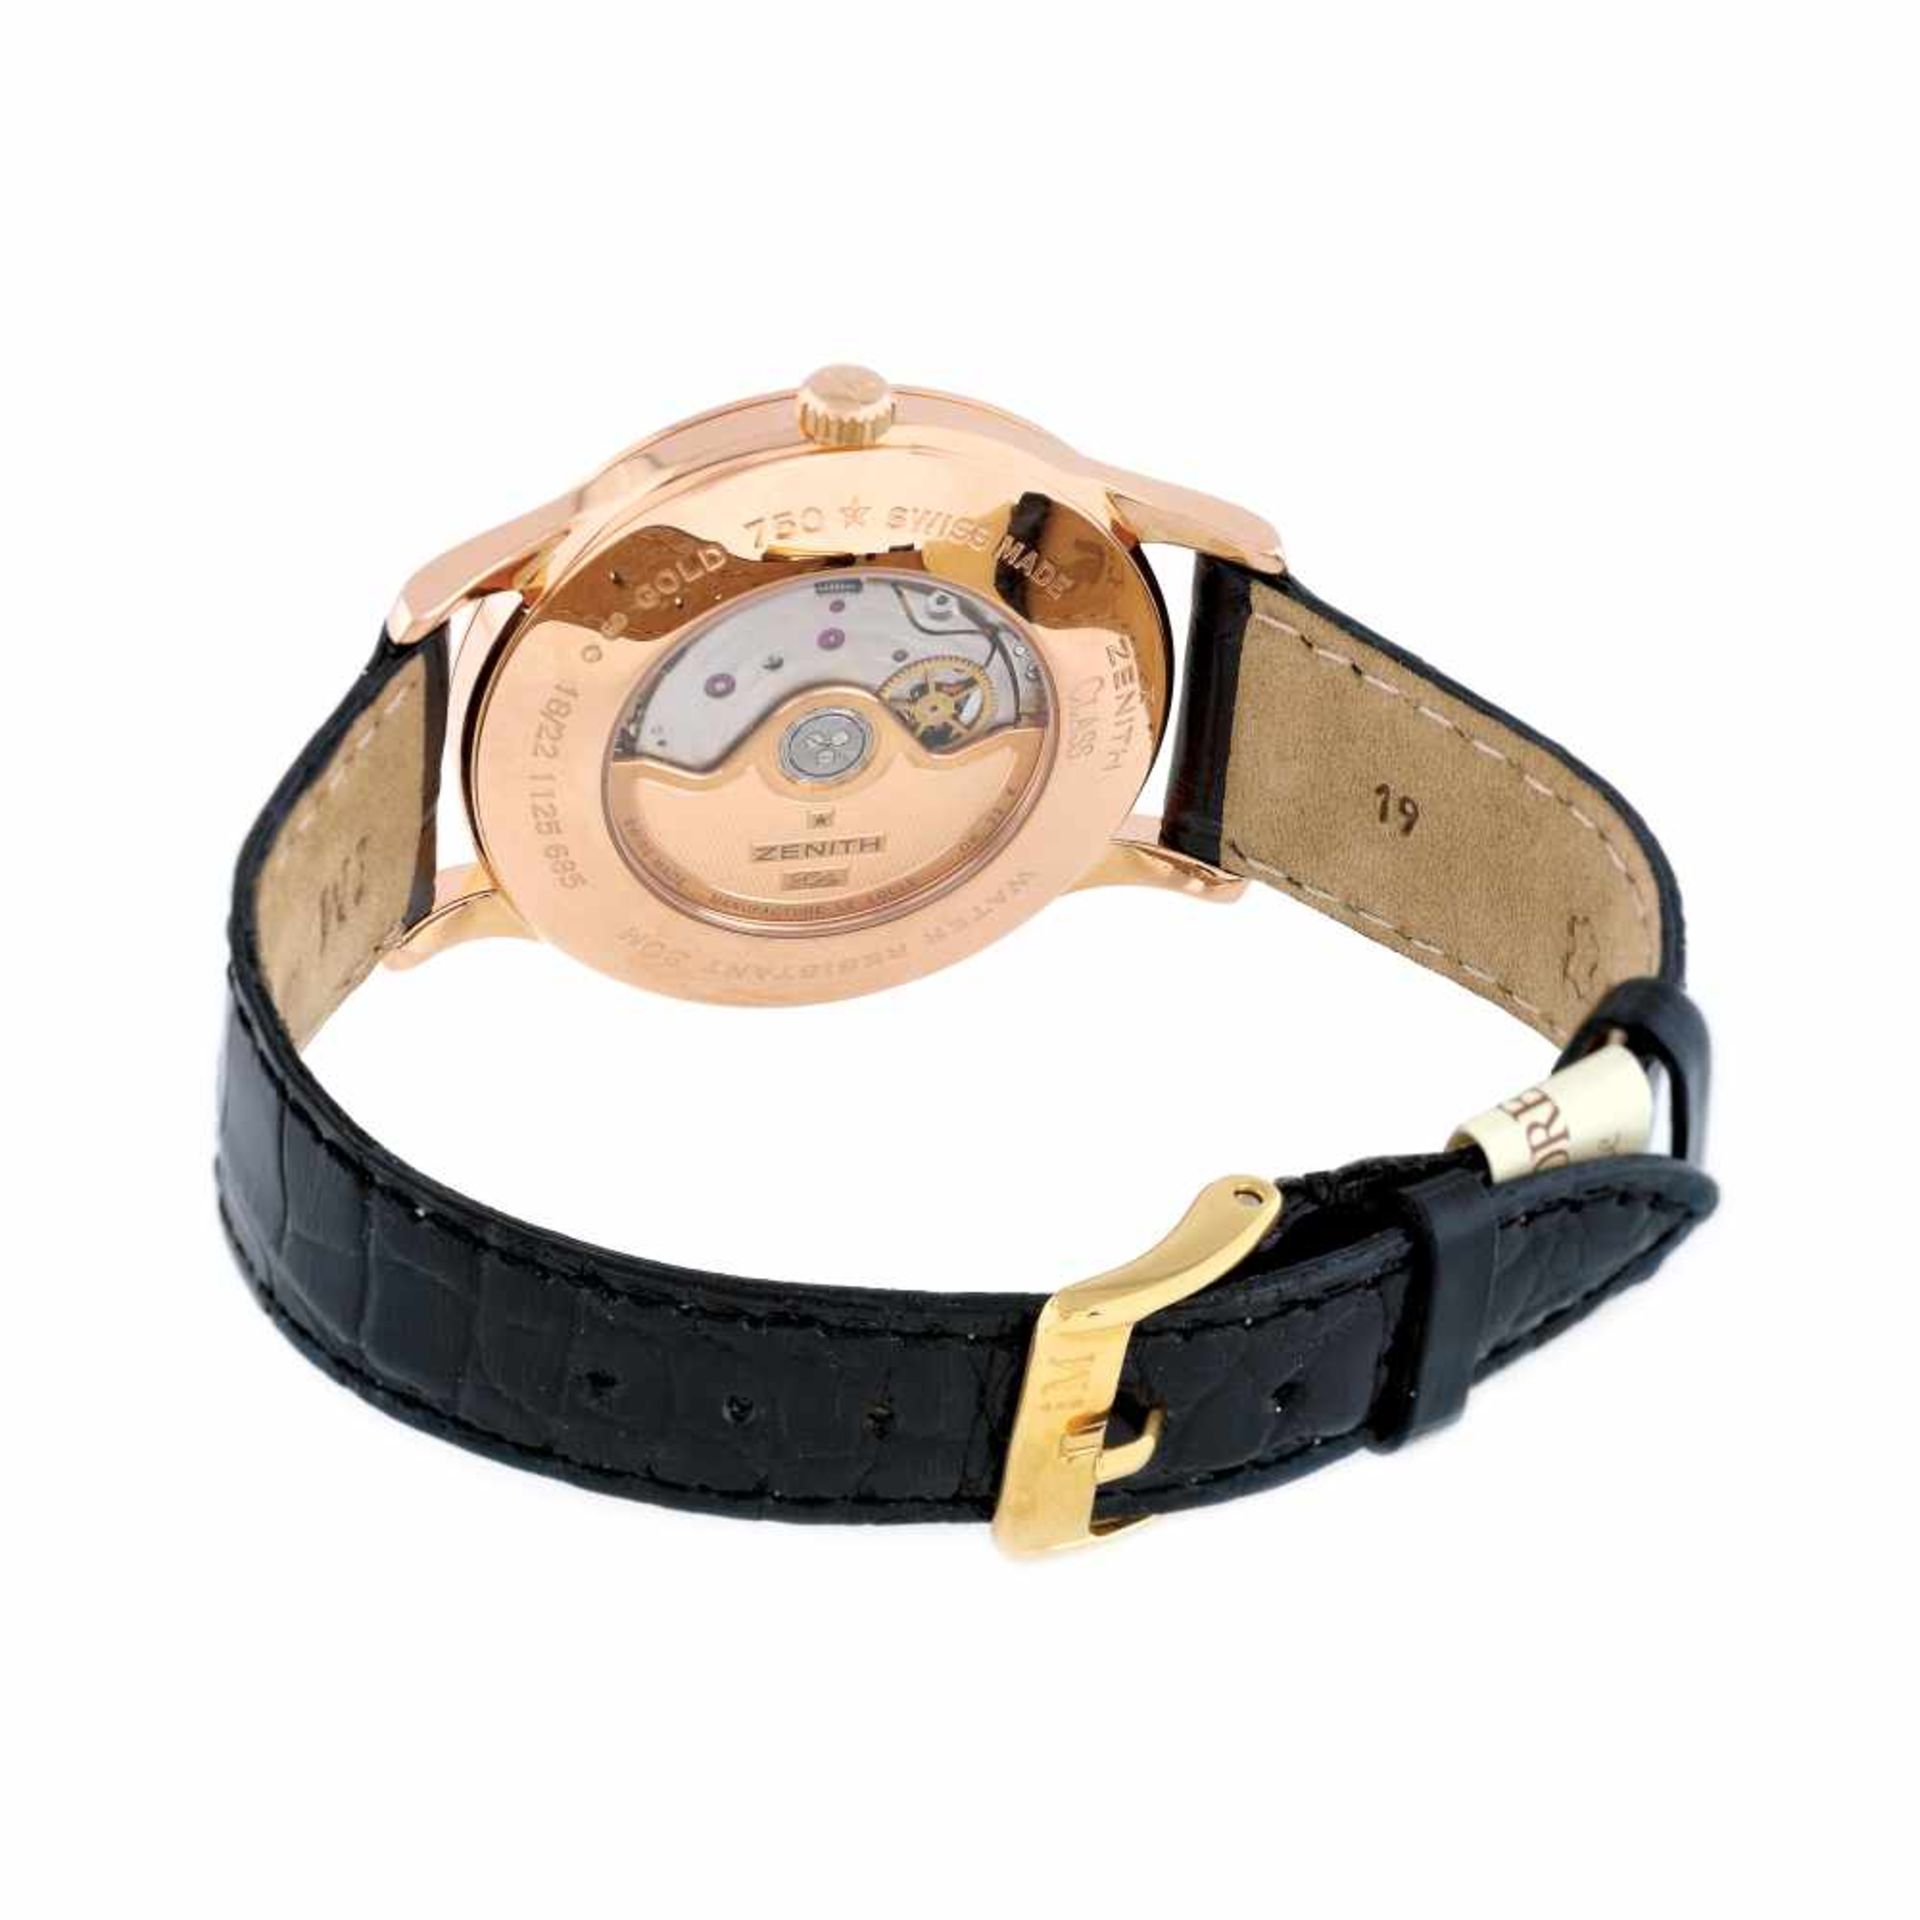 Zenith Class Elite wristwatch, rose gold, men, provenance documents - Image 3 of 4